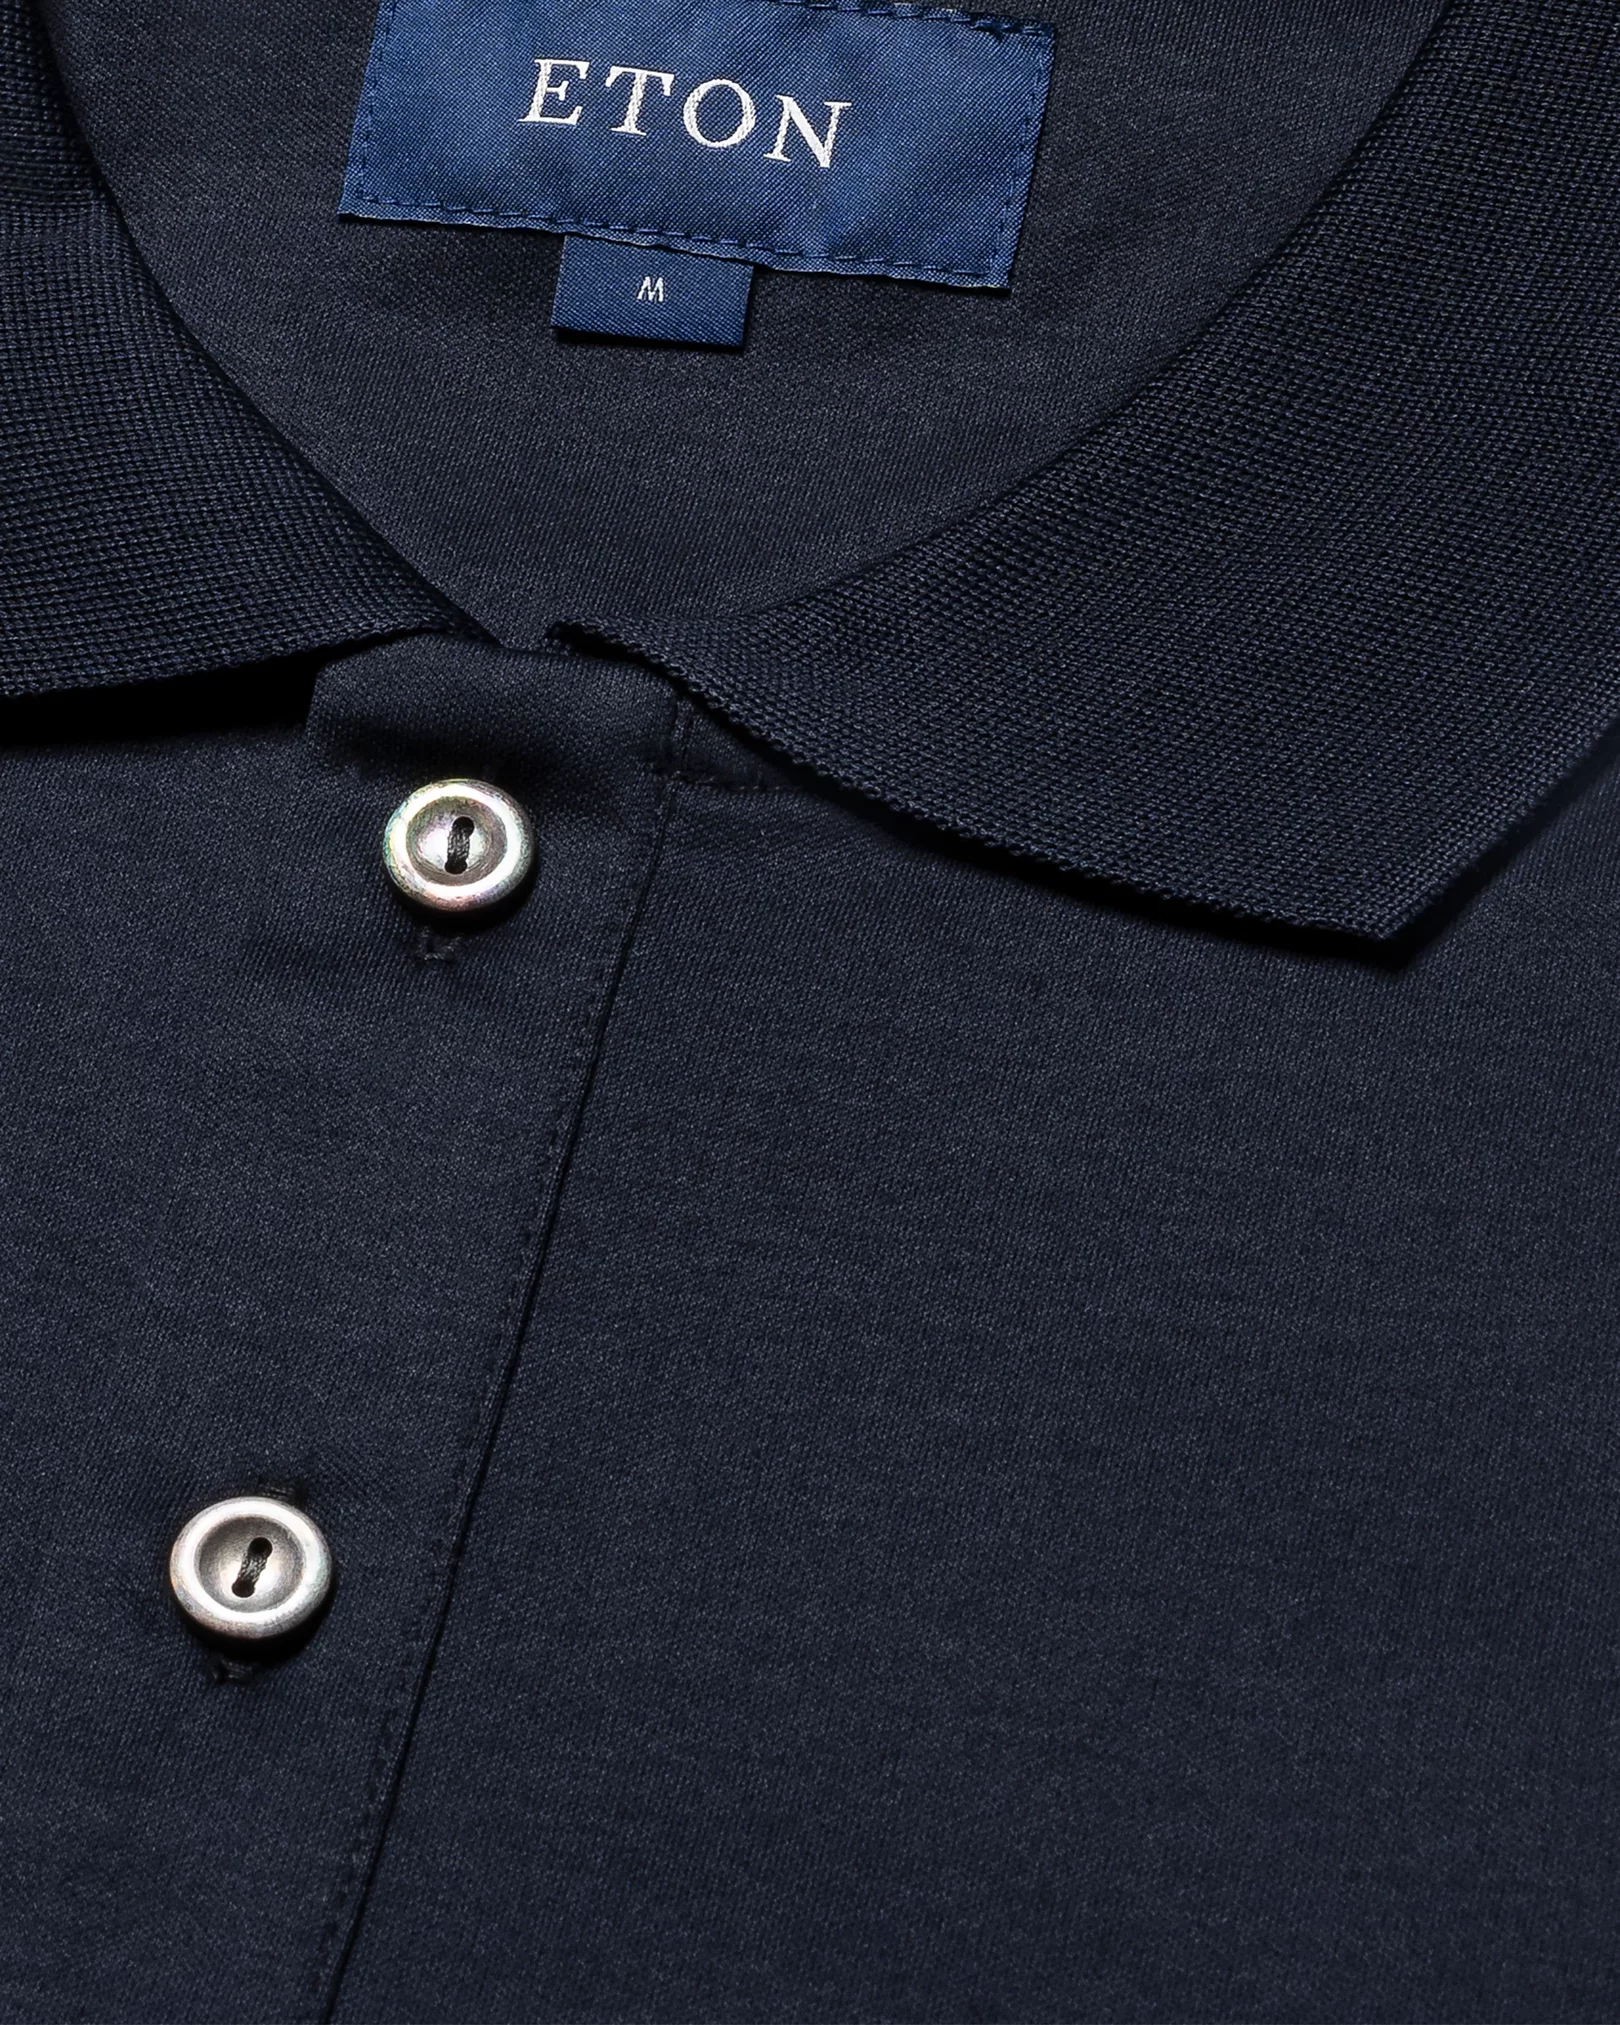 Eton - navy blue knitted collar short sleeve regular fit